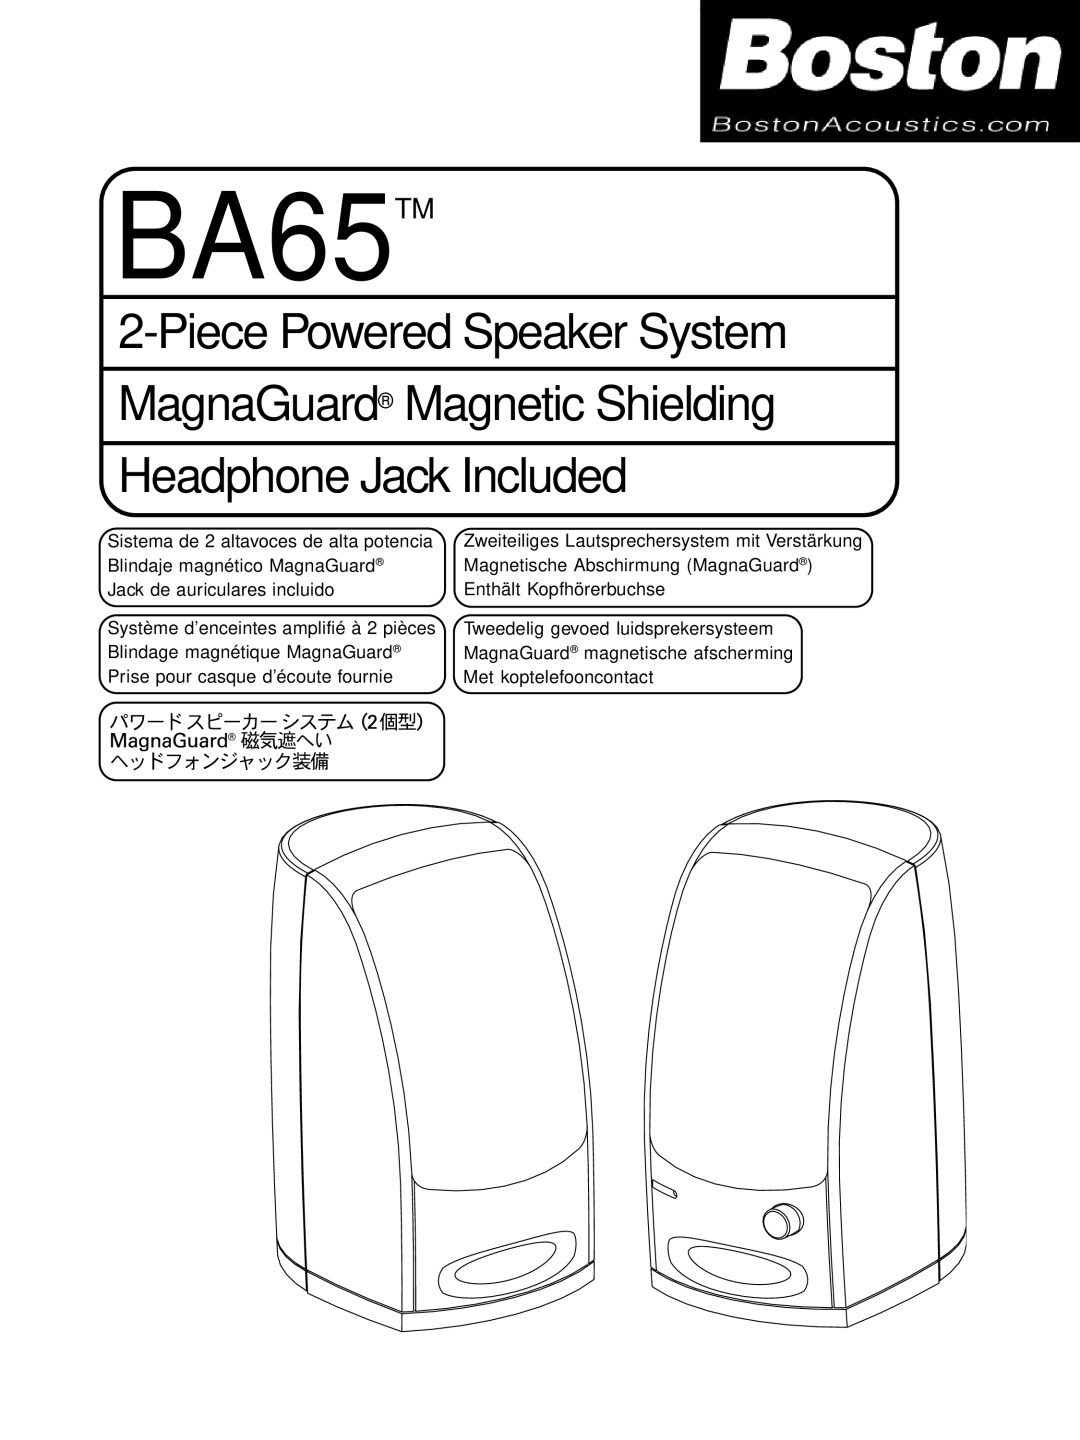 Boston Acoustics manual BA65TM, PiecePowered Speaker System, MagnaGuard Magnetic Shielding, Headphone Jack Included 